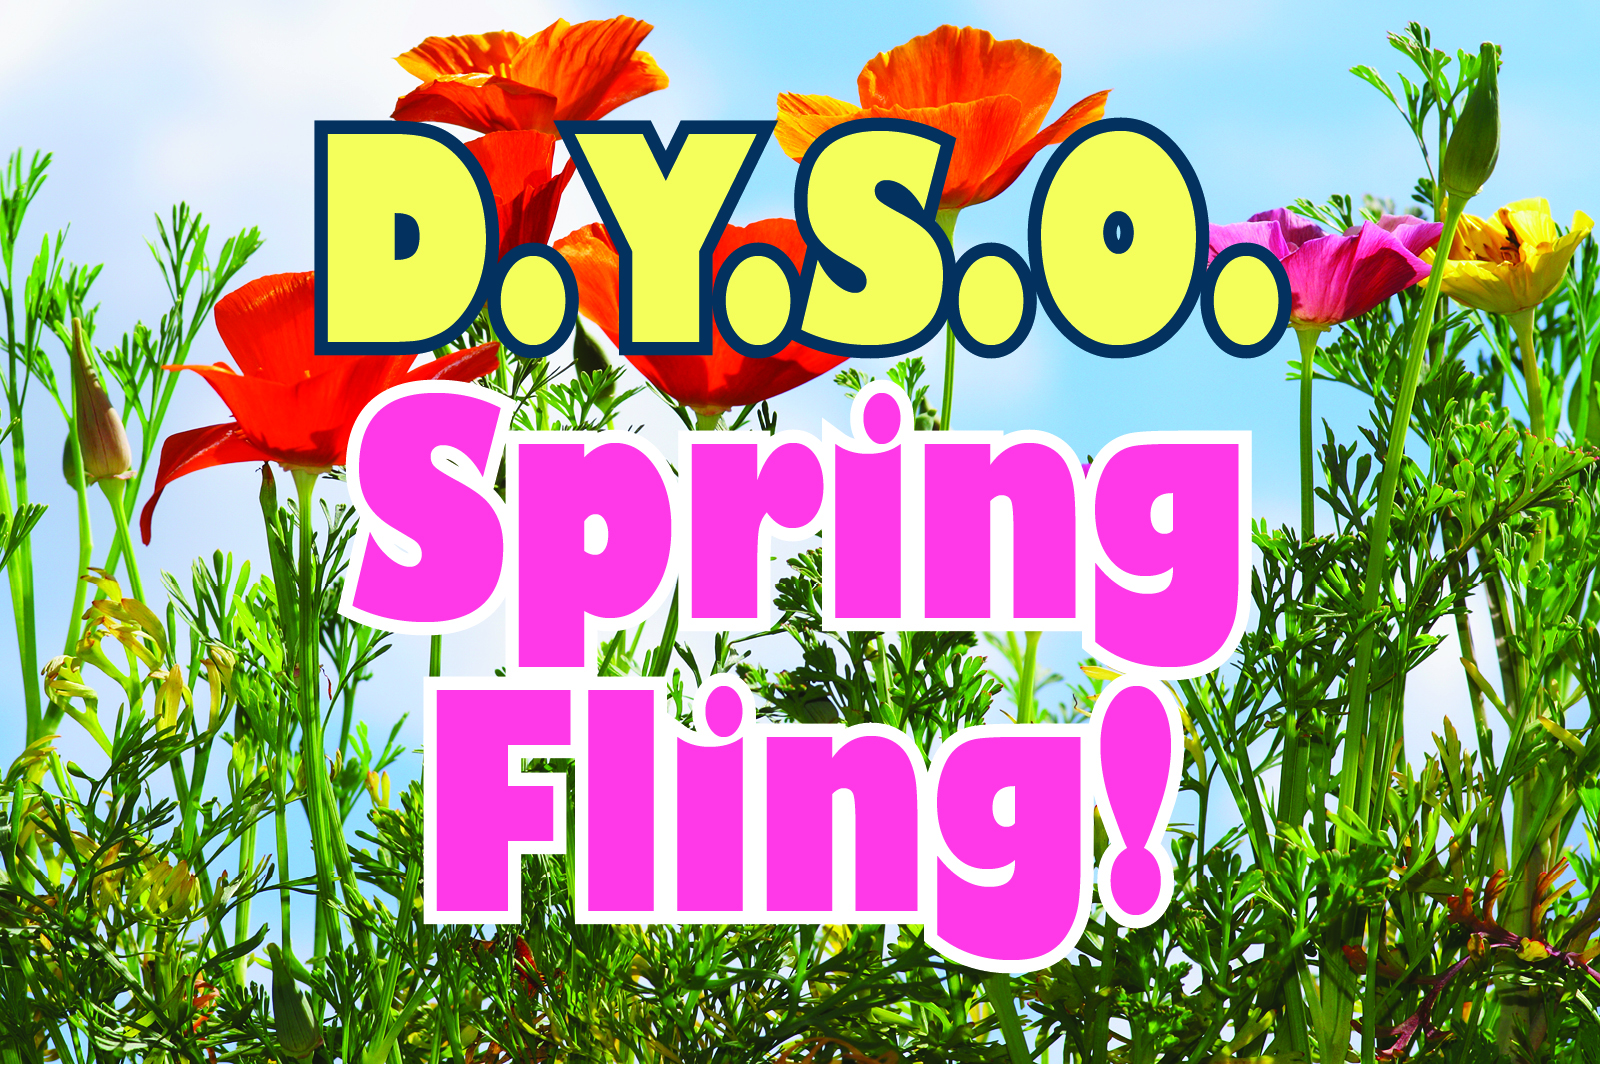 DYSO Spring Fling!